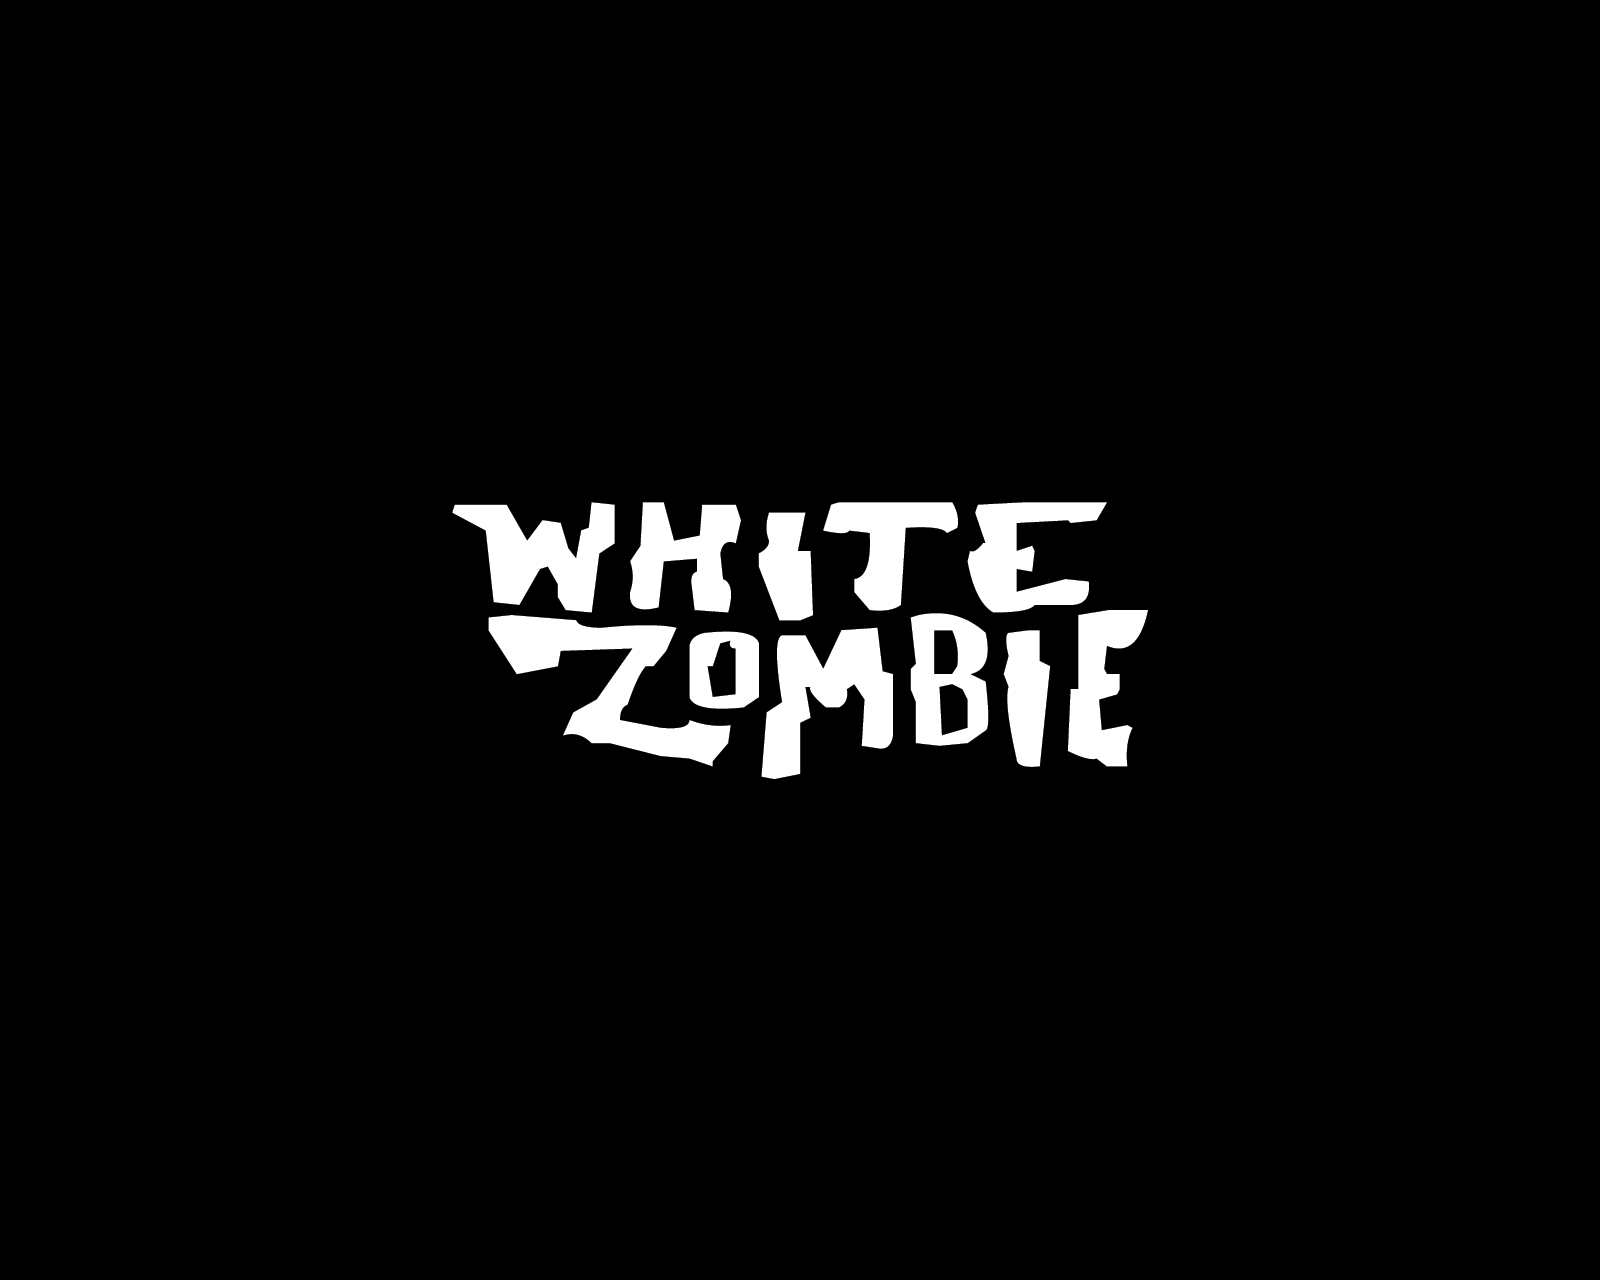 Music White Zombie Wallpaper